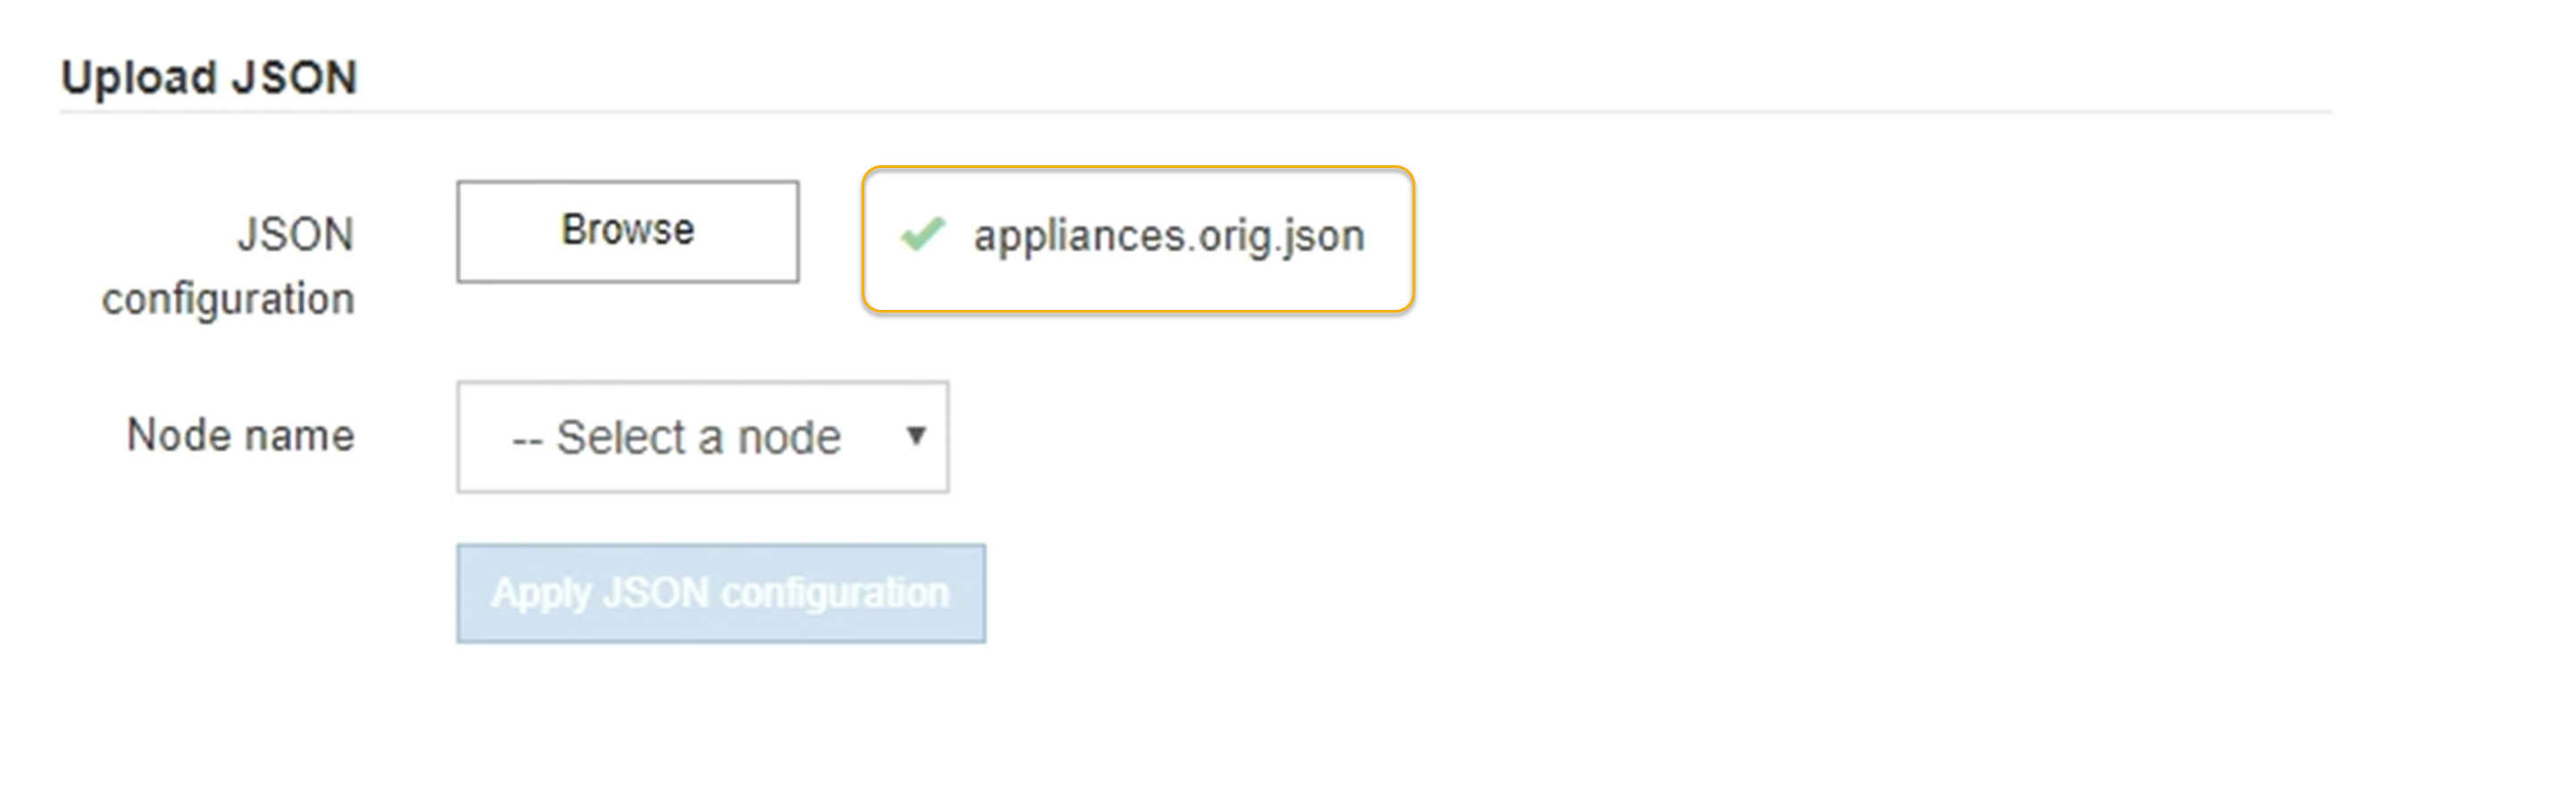 Update appliance configuration JSON uploaded